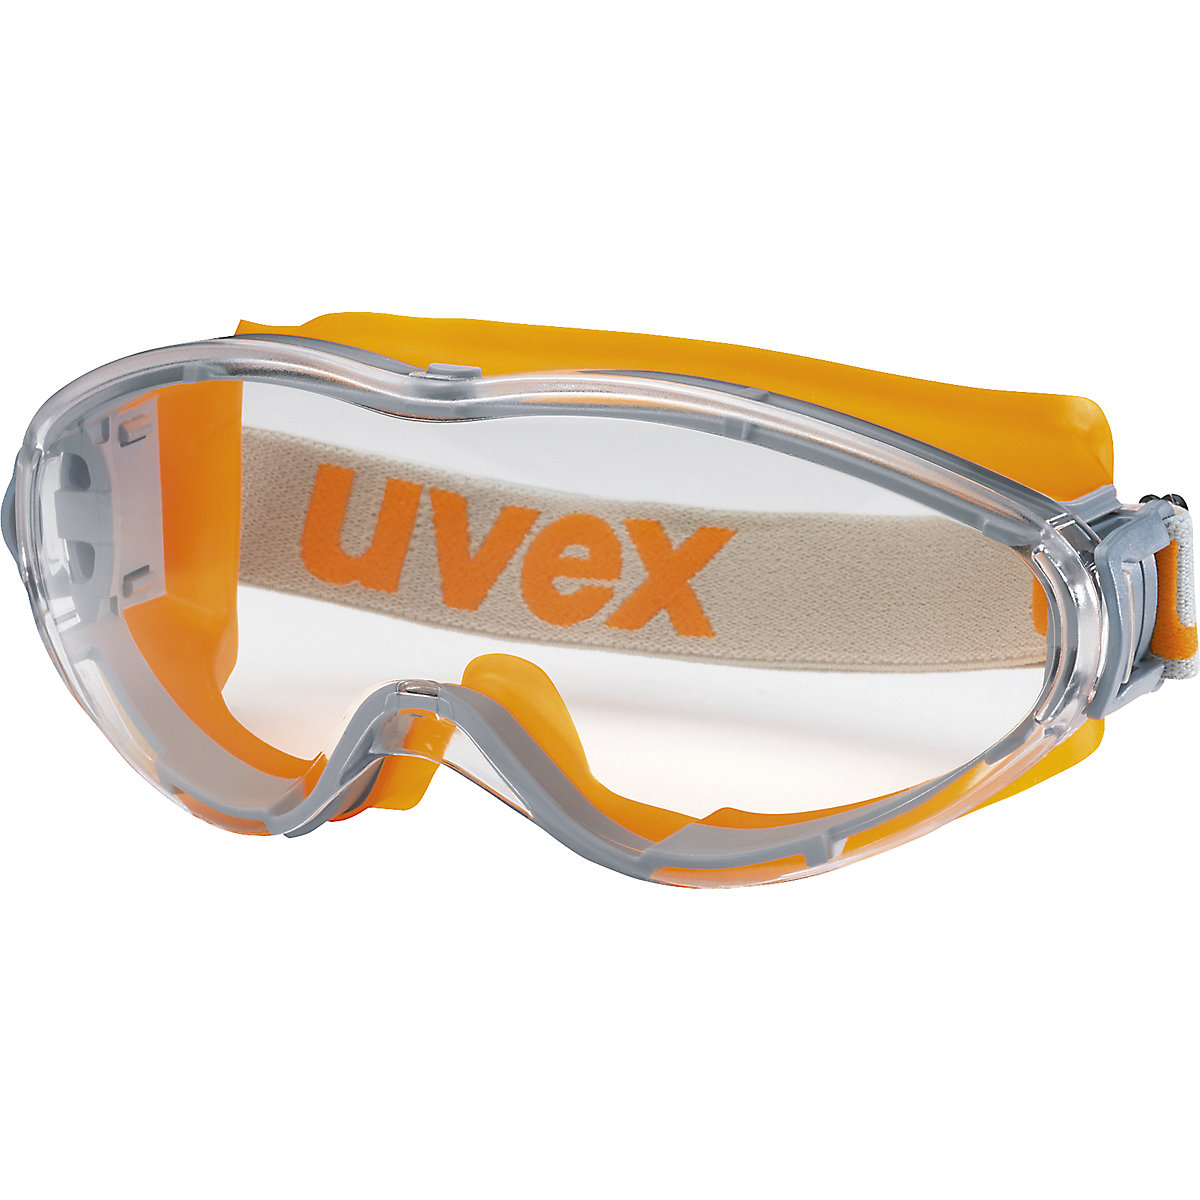 Velike zaštitne naočale ultrasonic - Uvex